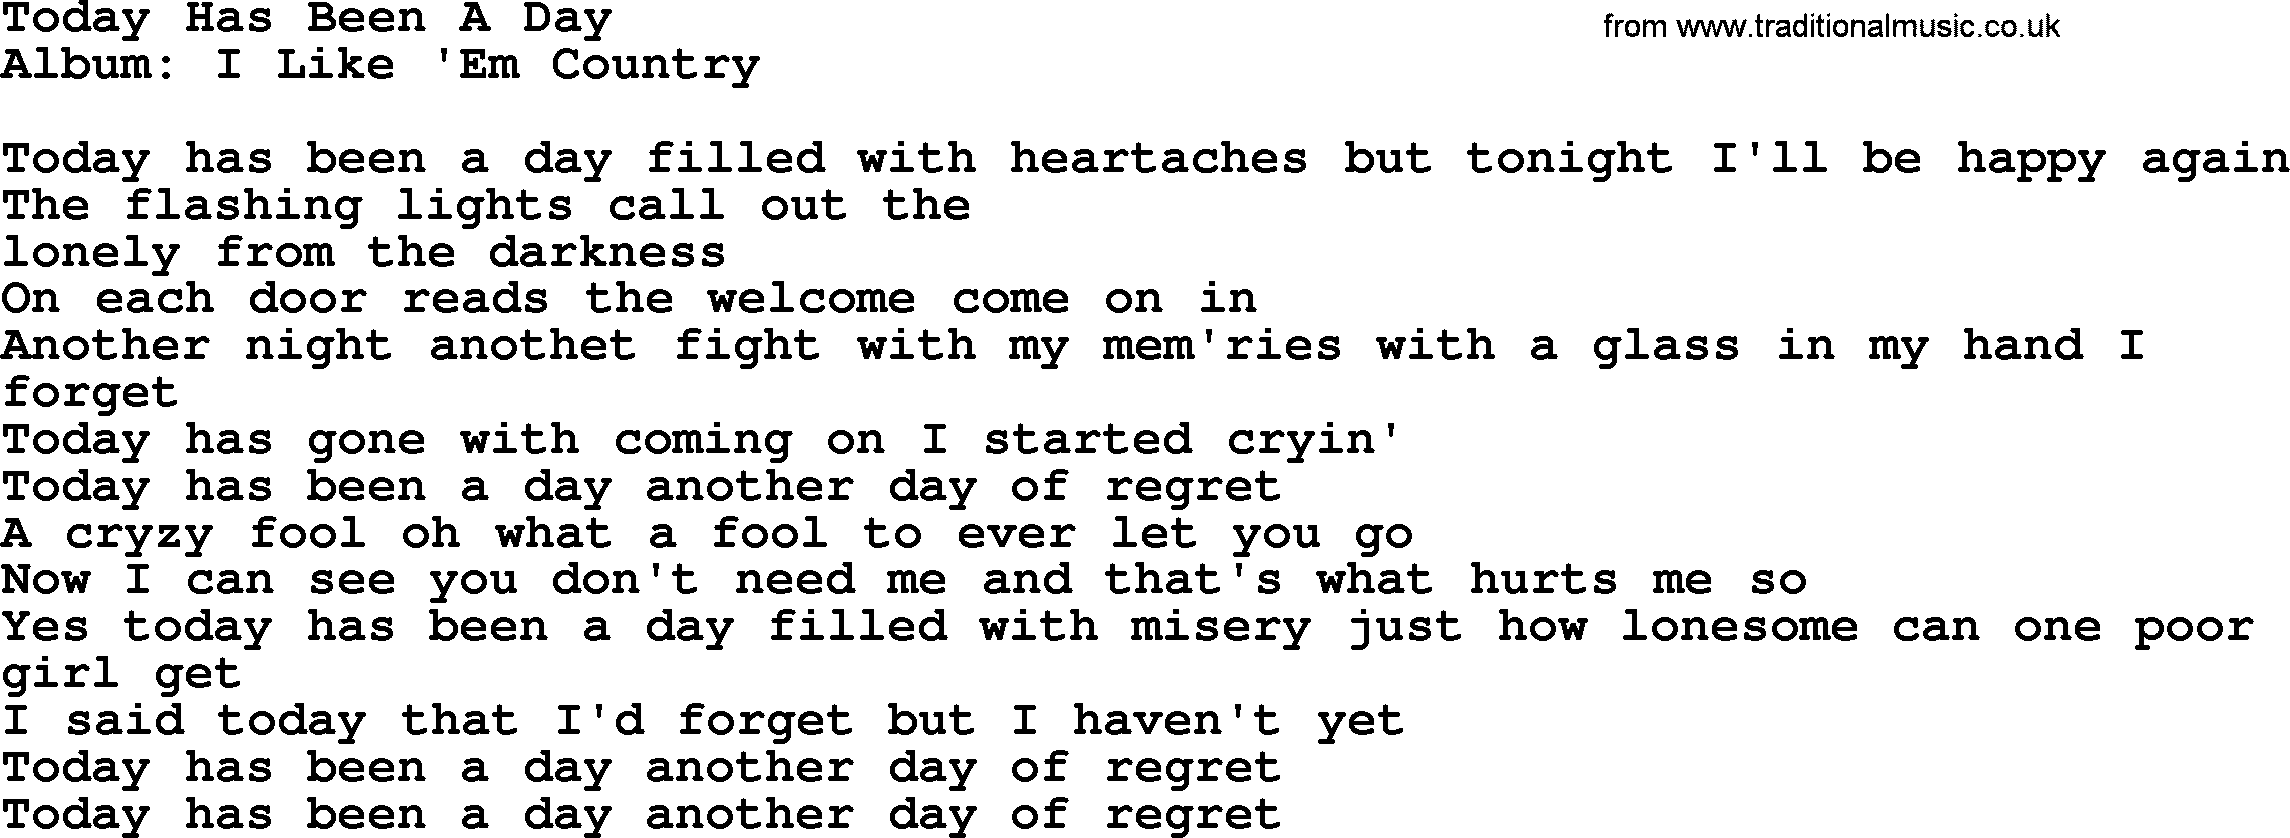 Loretta Lynn song: Today Has Been A Day lyrics